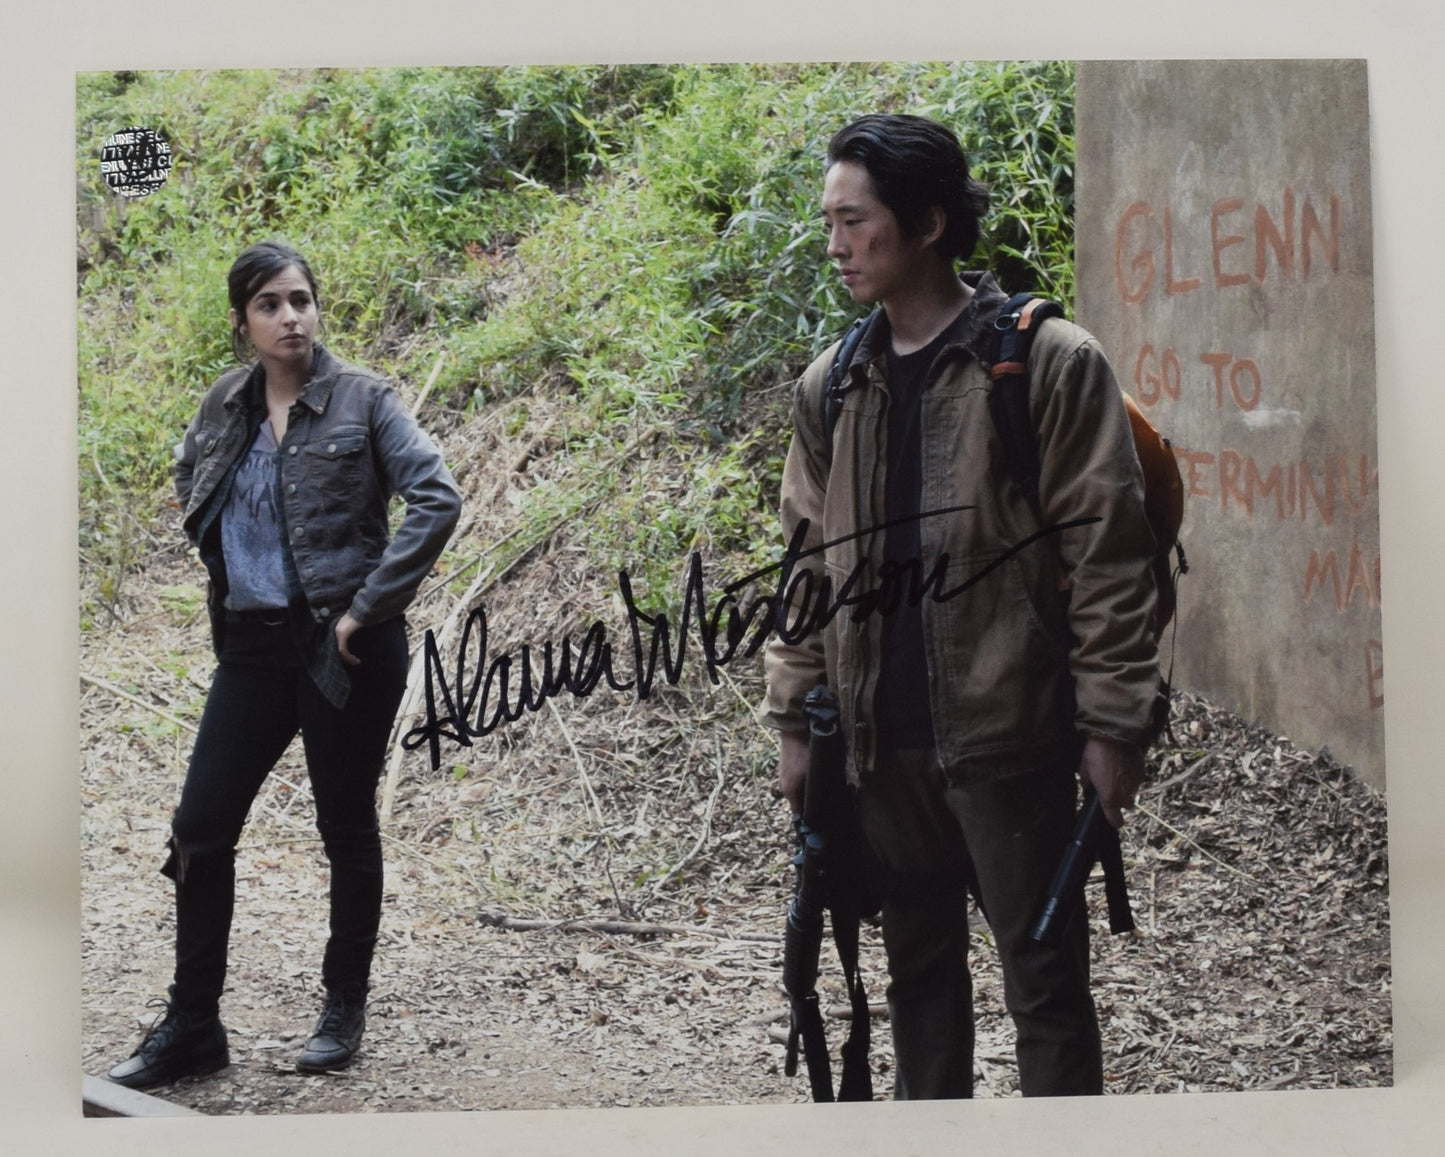 Alanna Masterson Walking Dead W/ Glenn Signed Autograph 8 x 10 Photo COA